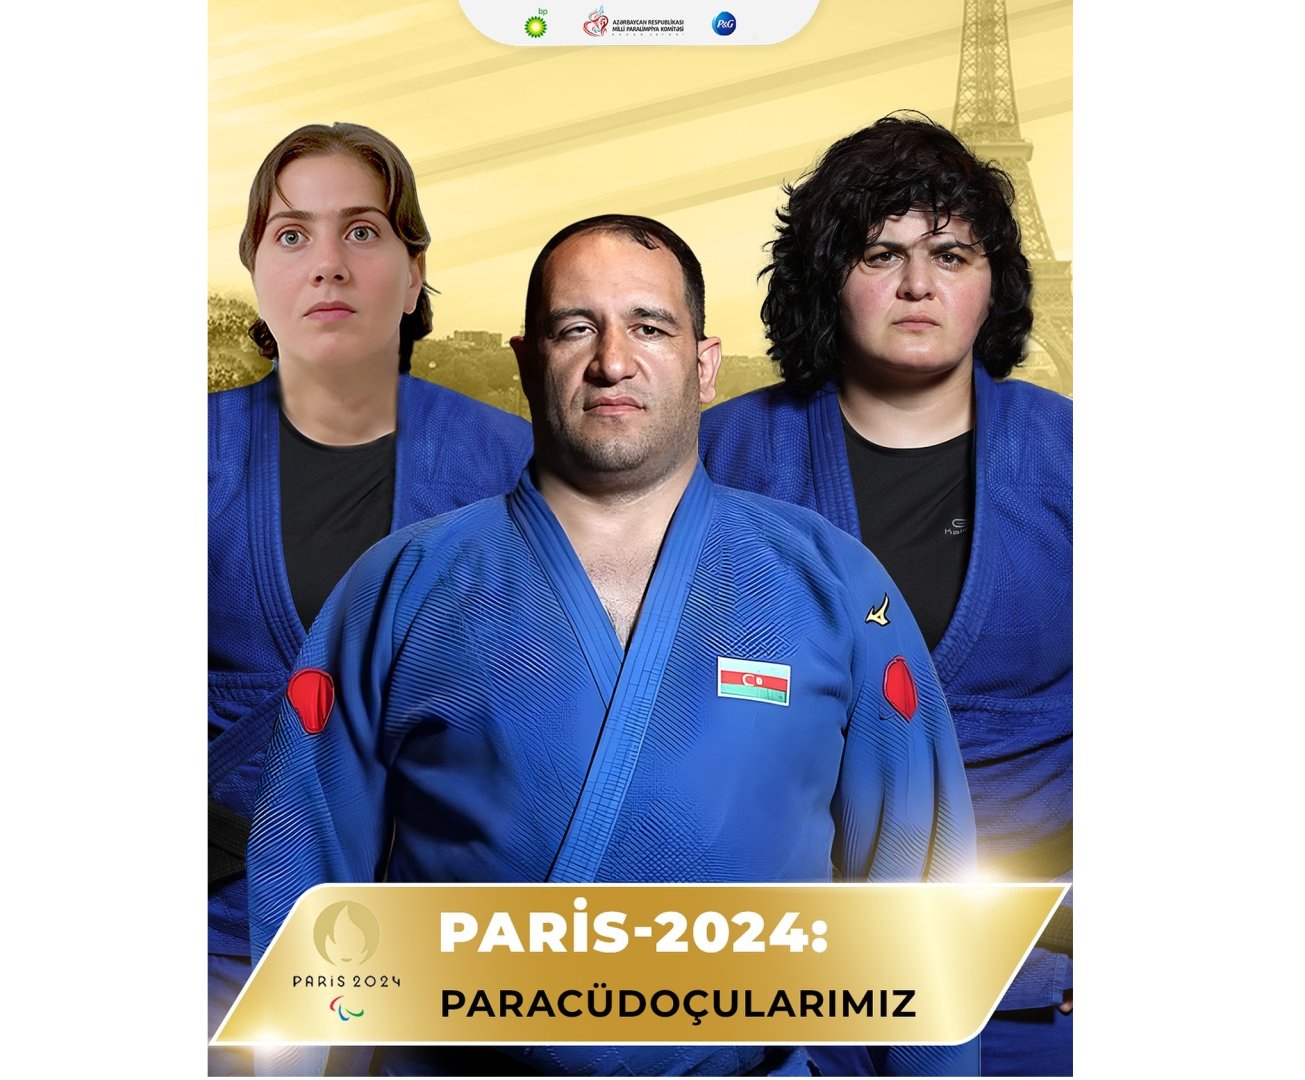 Азербайджан в Париже-2024 будут представлять три парадзюдоиста